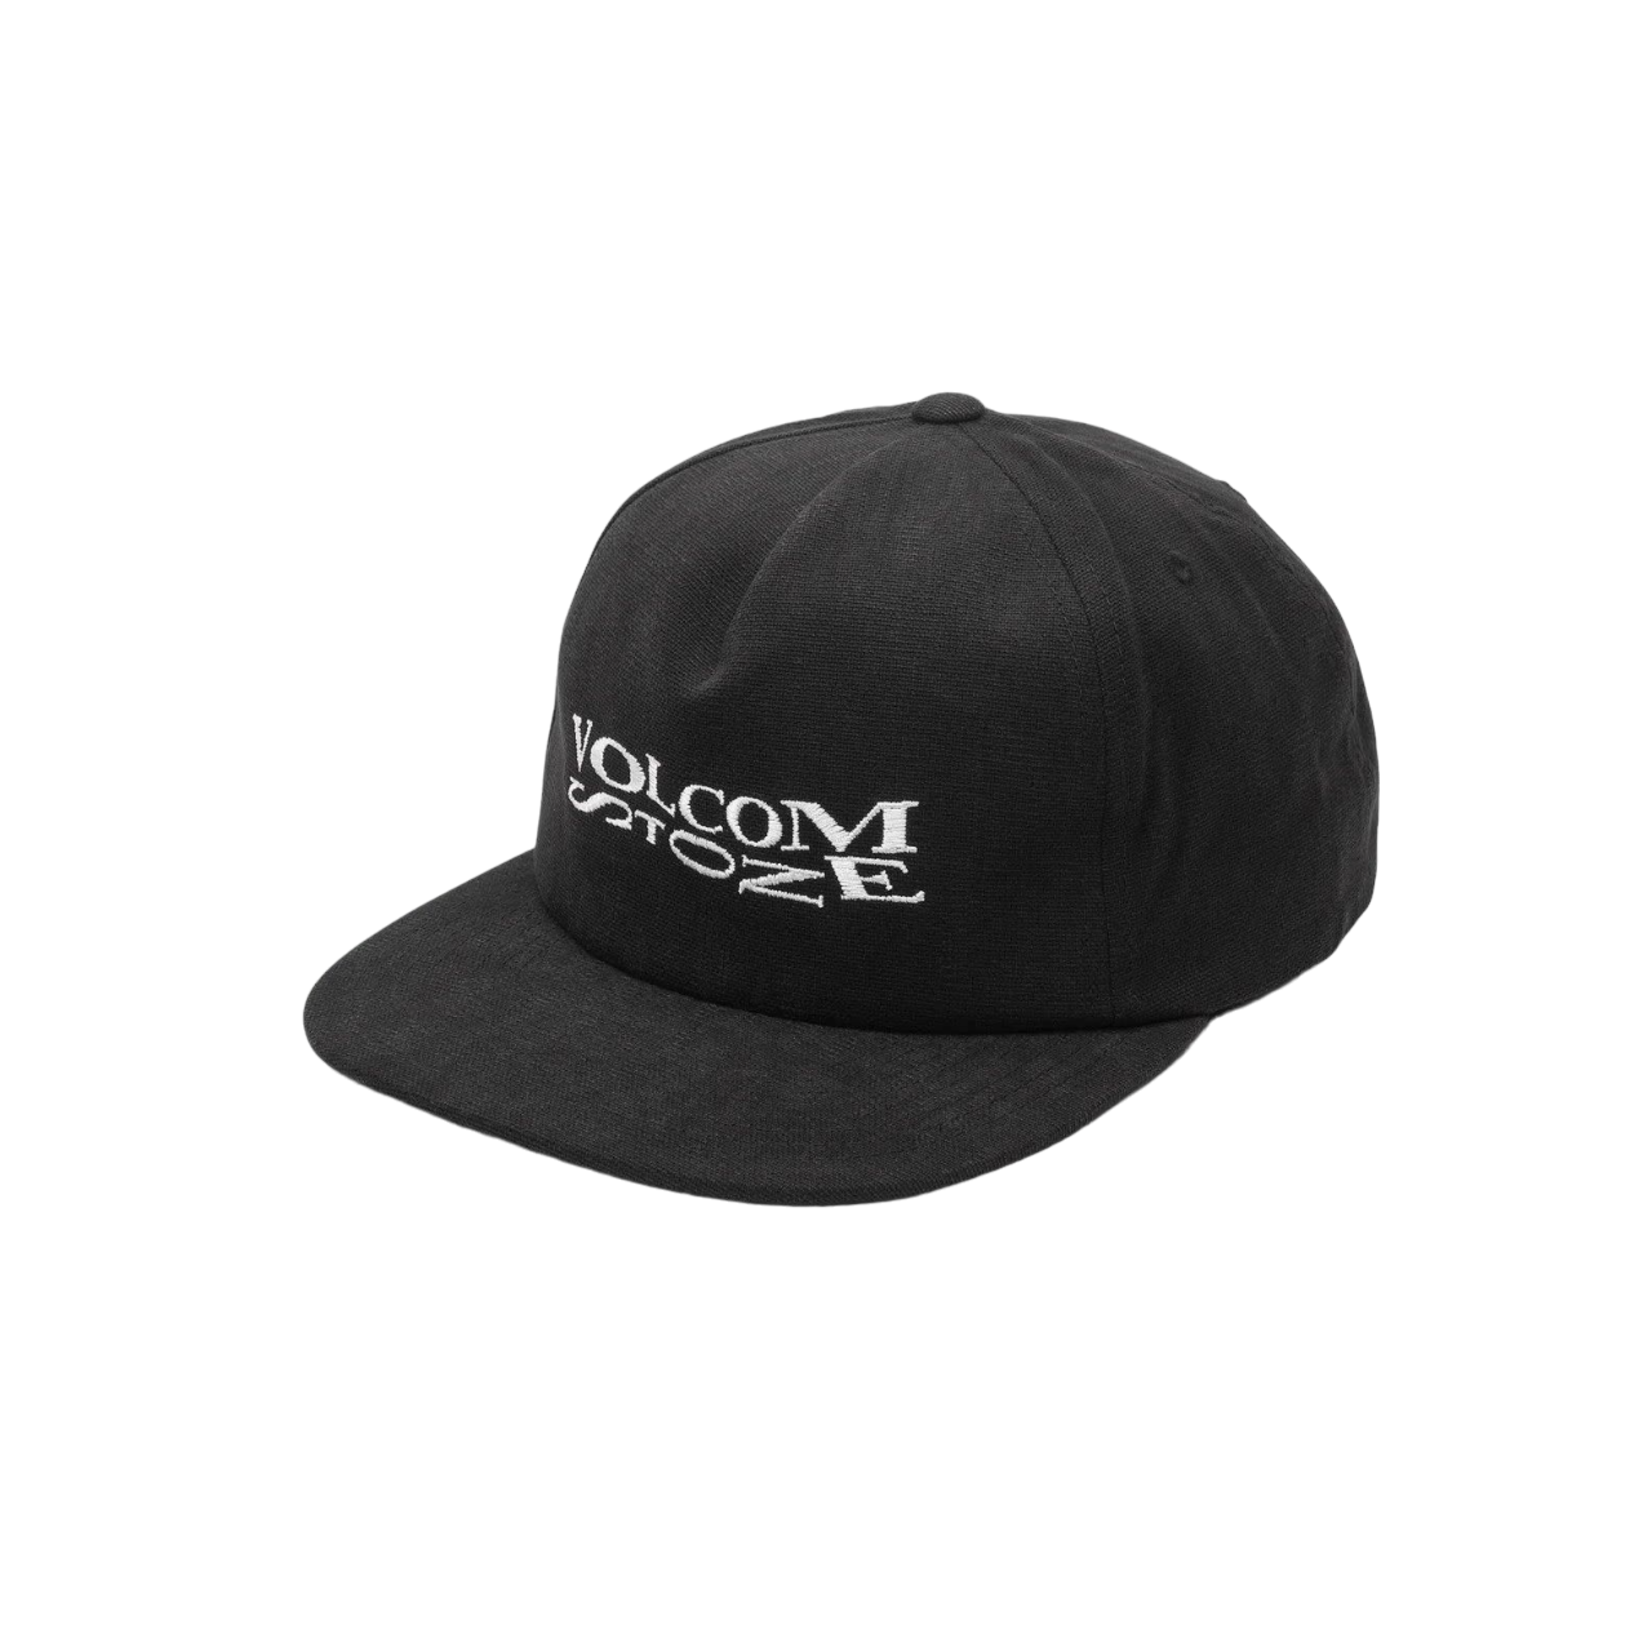 Volcom Volcom Skate Vitals Adjustable Hat - Black